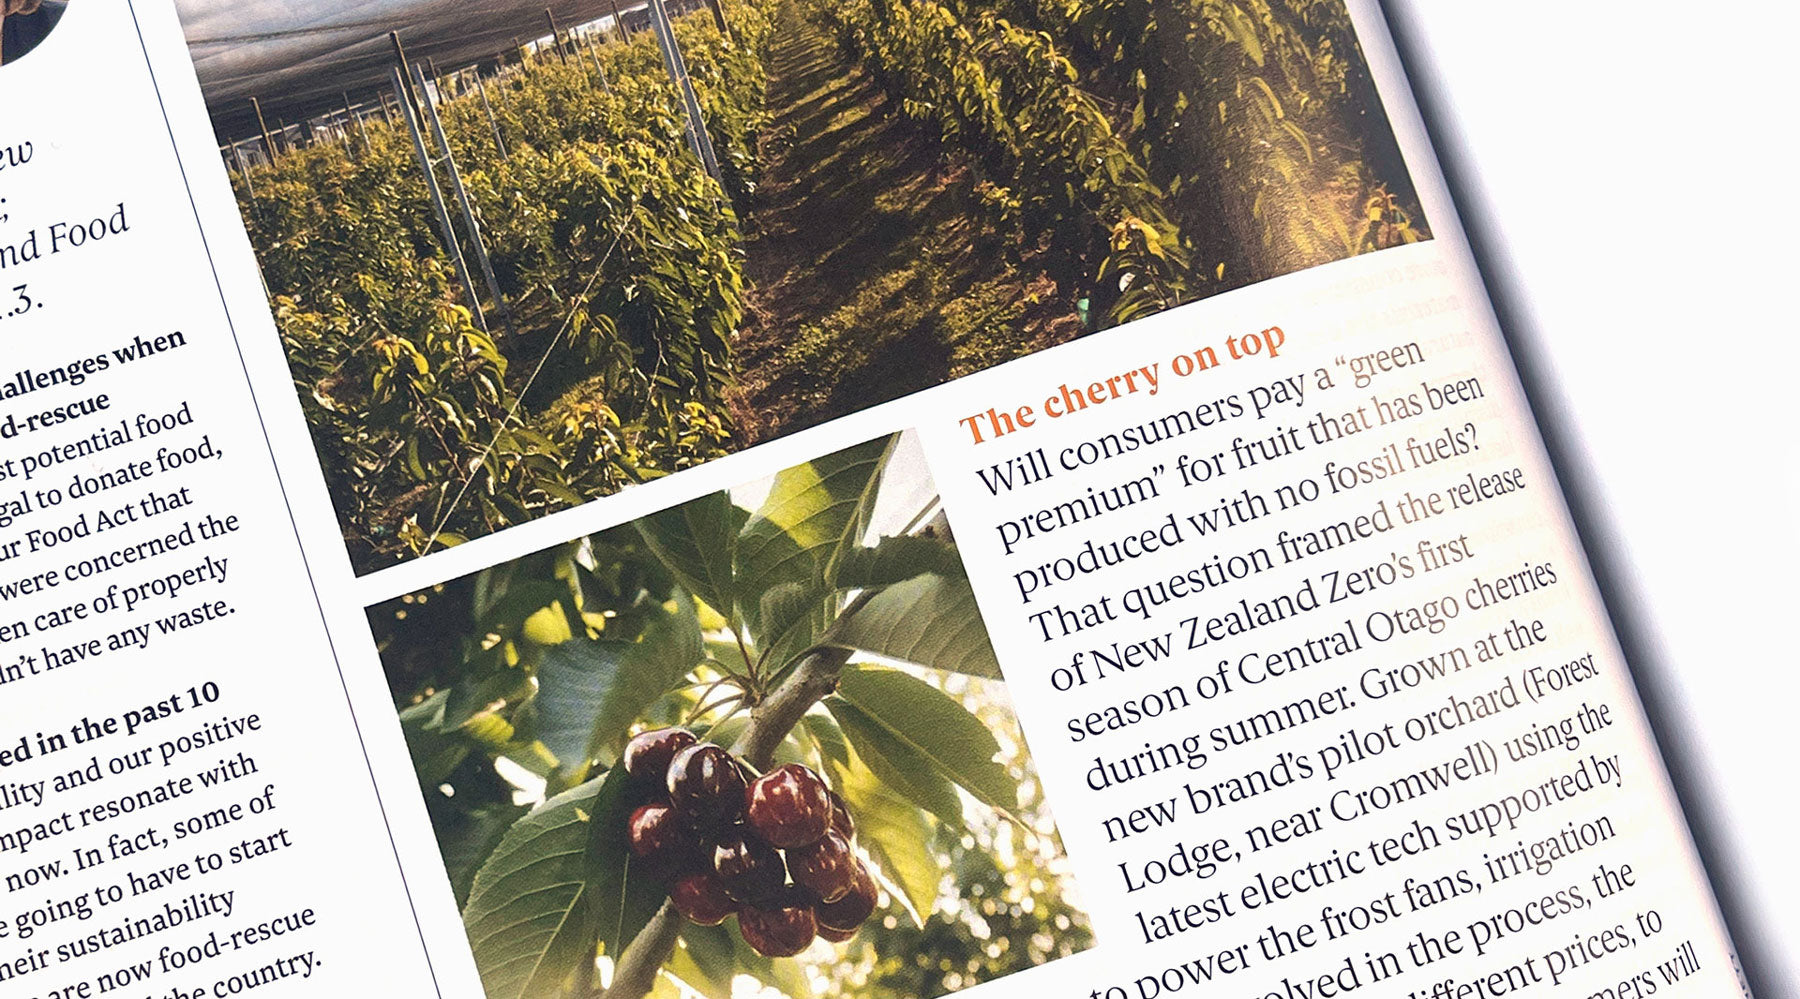 'The cherry on top' - NZ0 featured in Kia Ora magazine, Air New Zealand's inflight magazine.